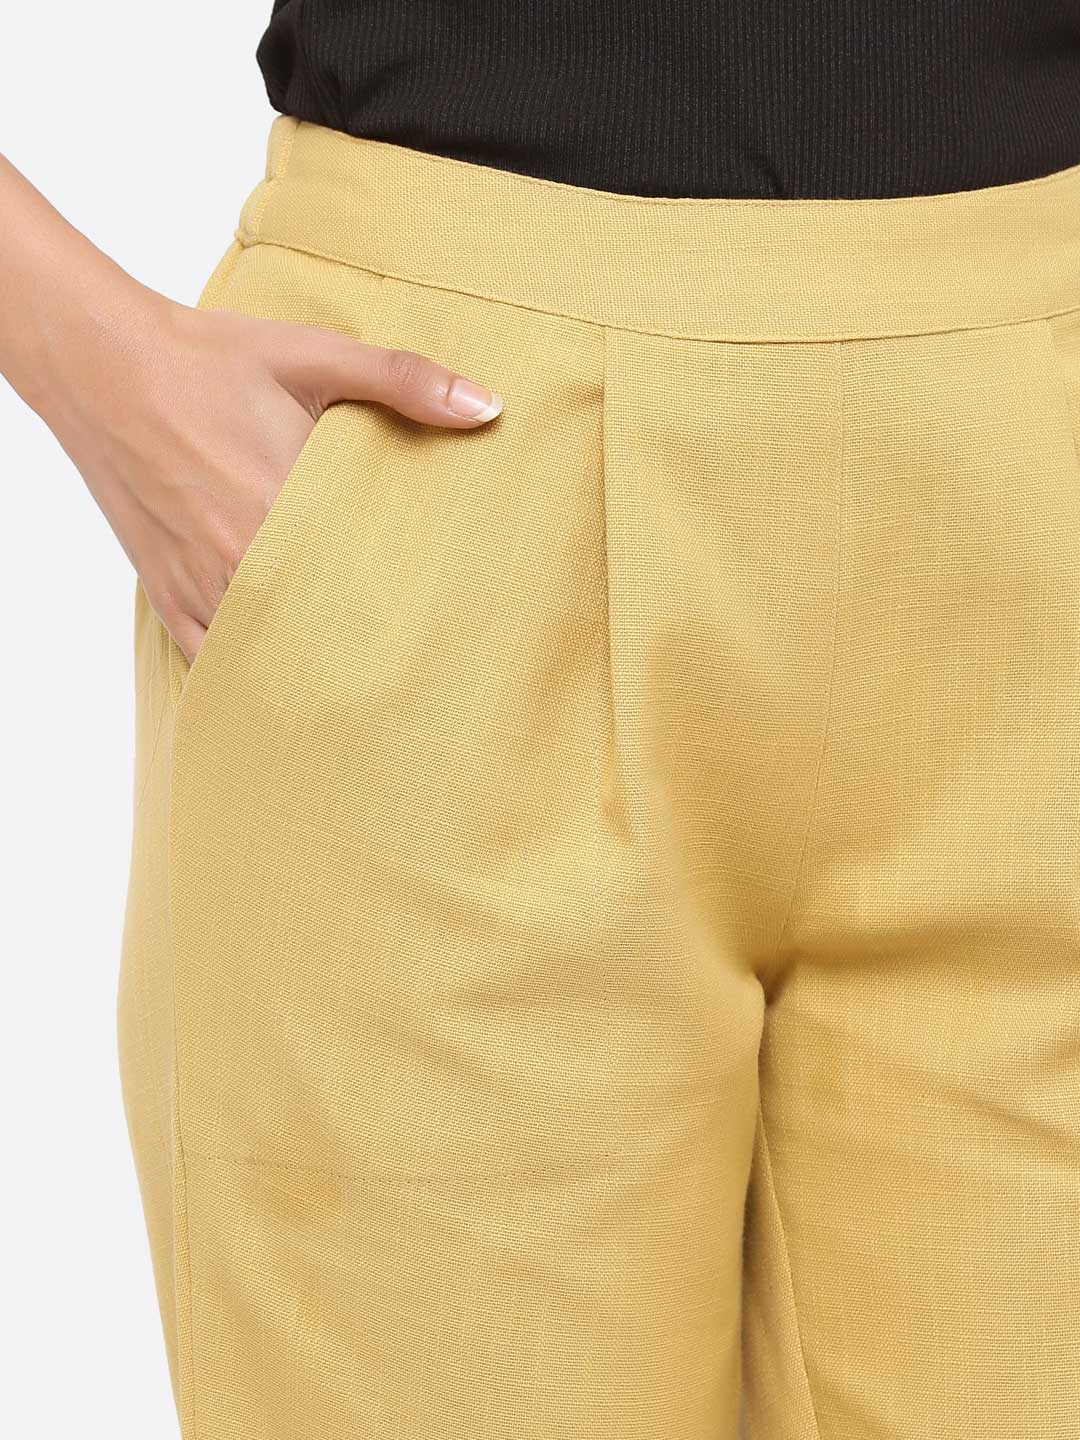 Buy Cotton Pants for Women